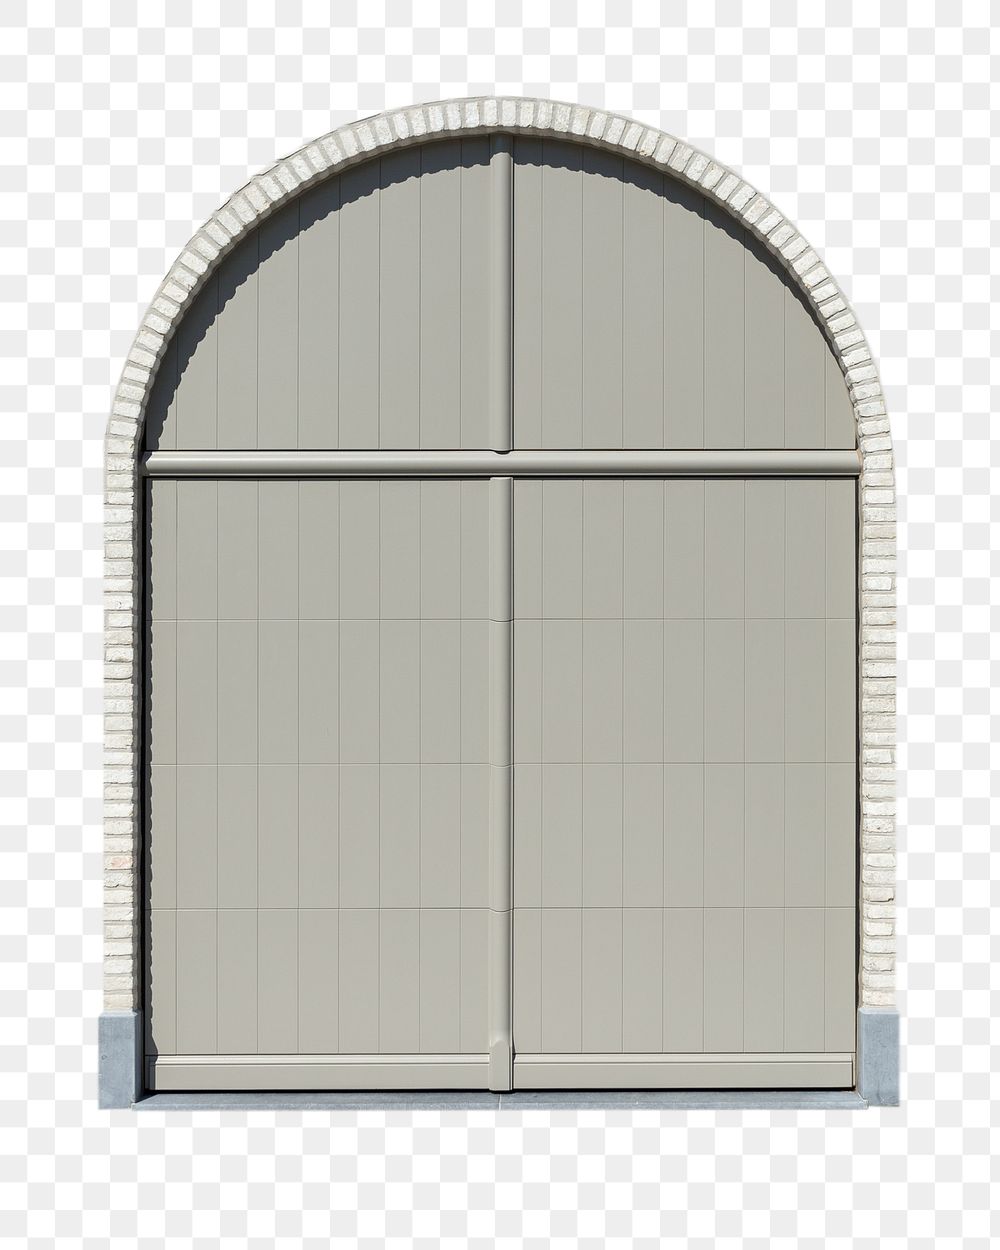 Arched gate png, transparent background